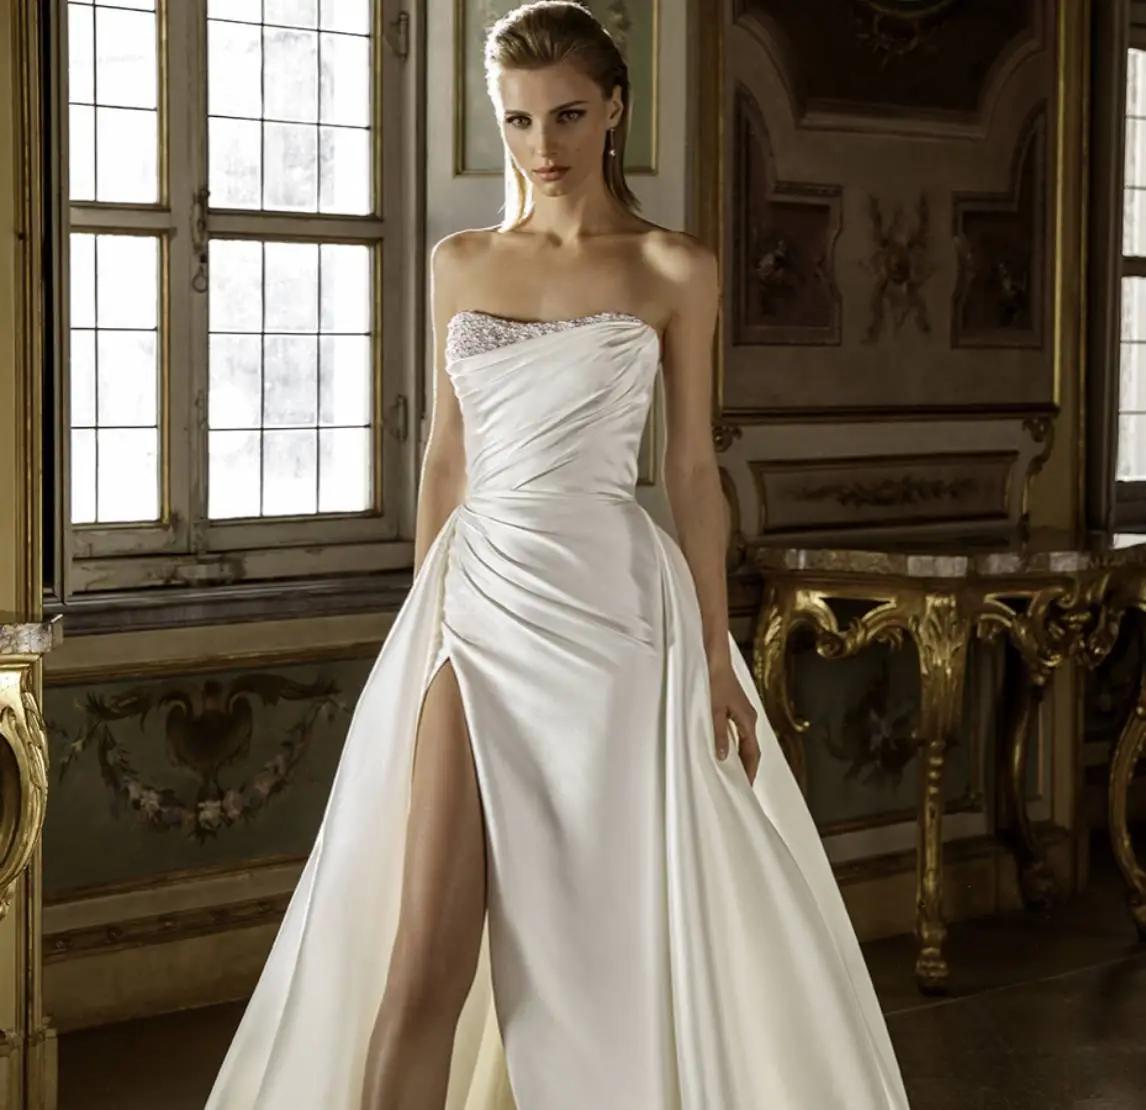 Model wearing a white gown by Pen Liv